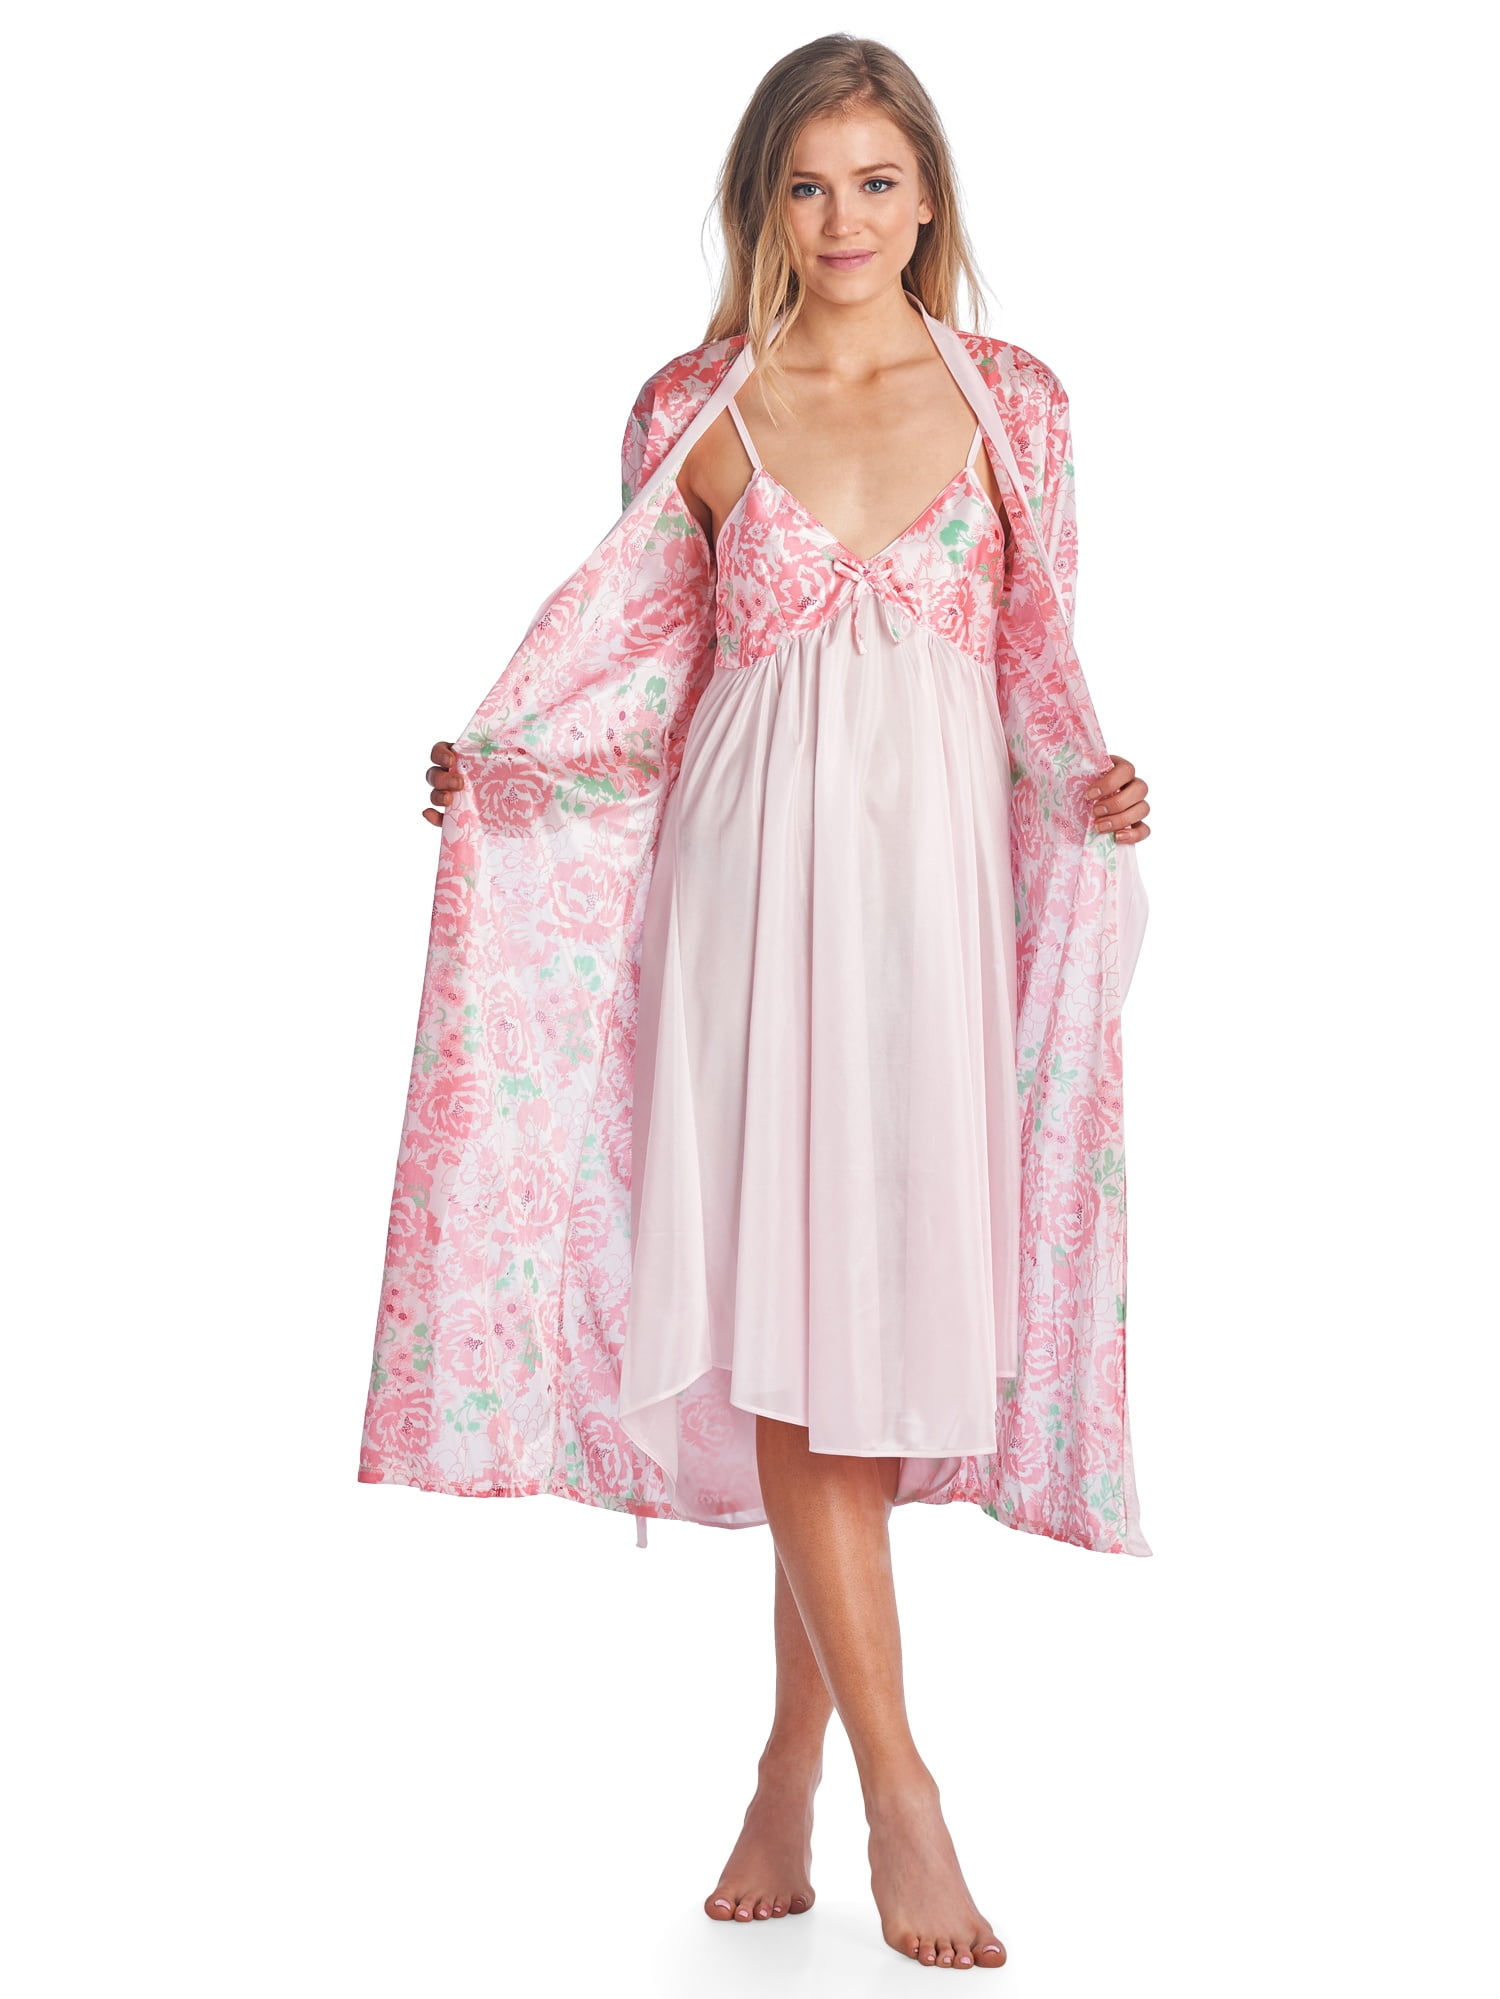 Buy > female sleeping gowns > in stock